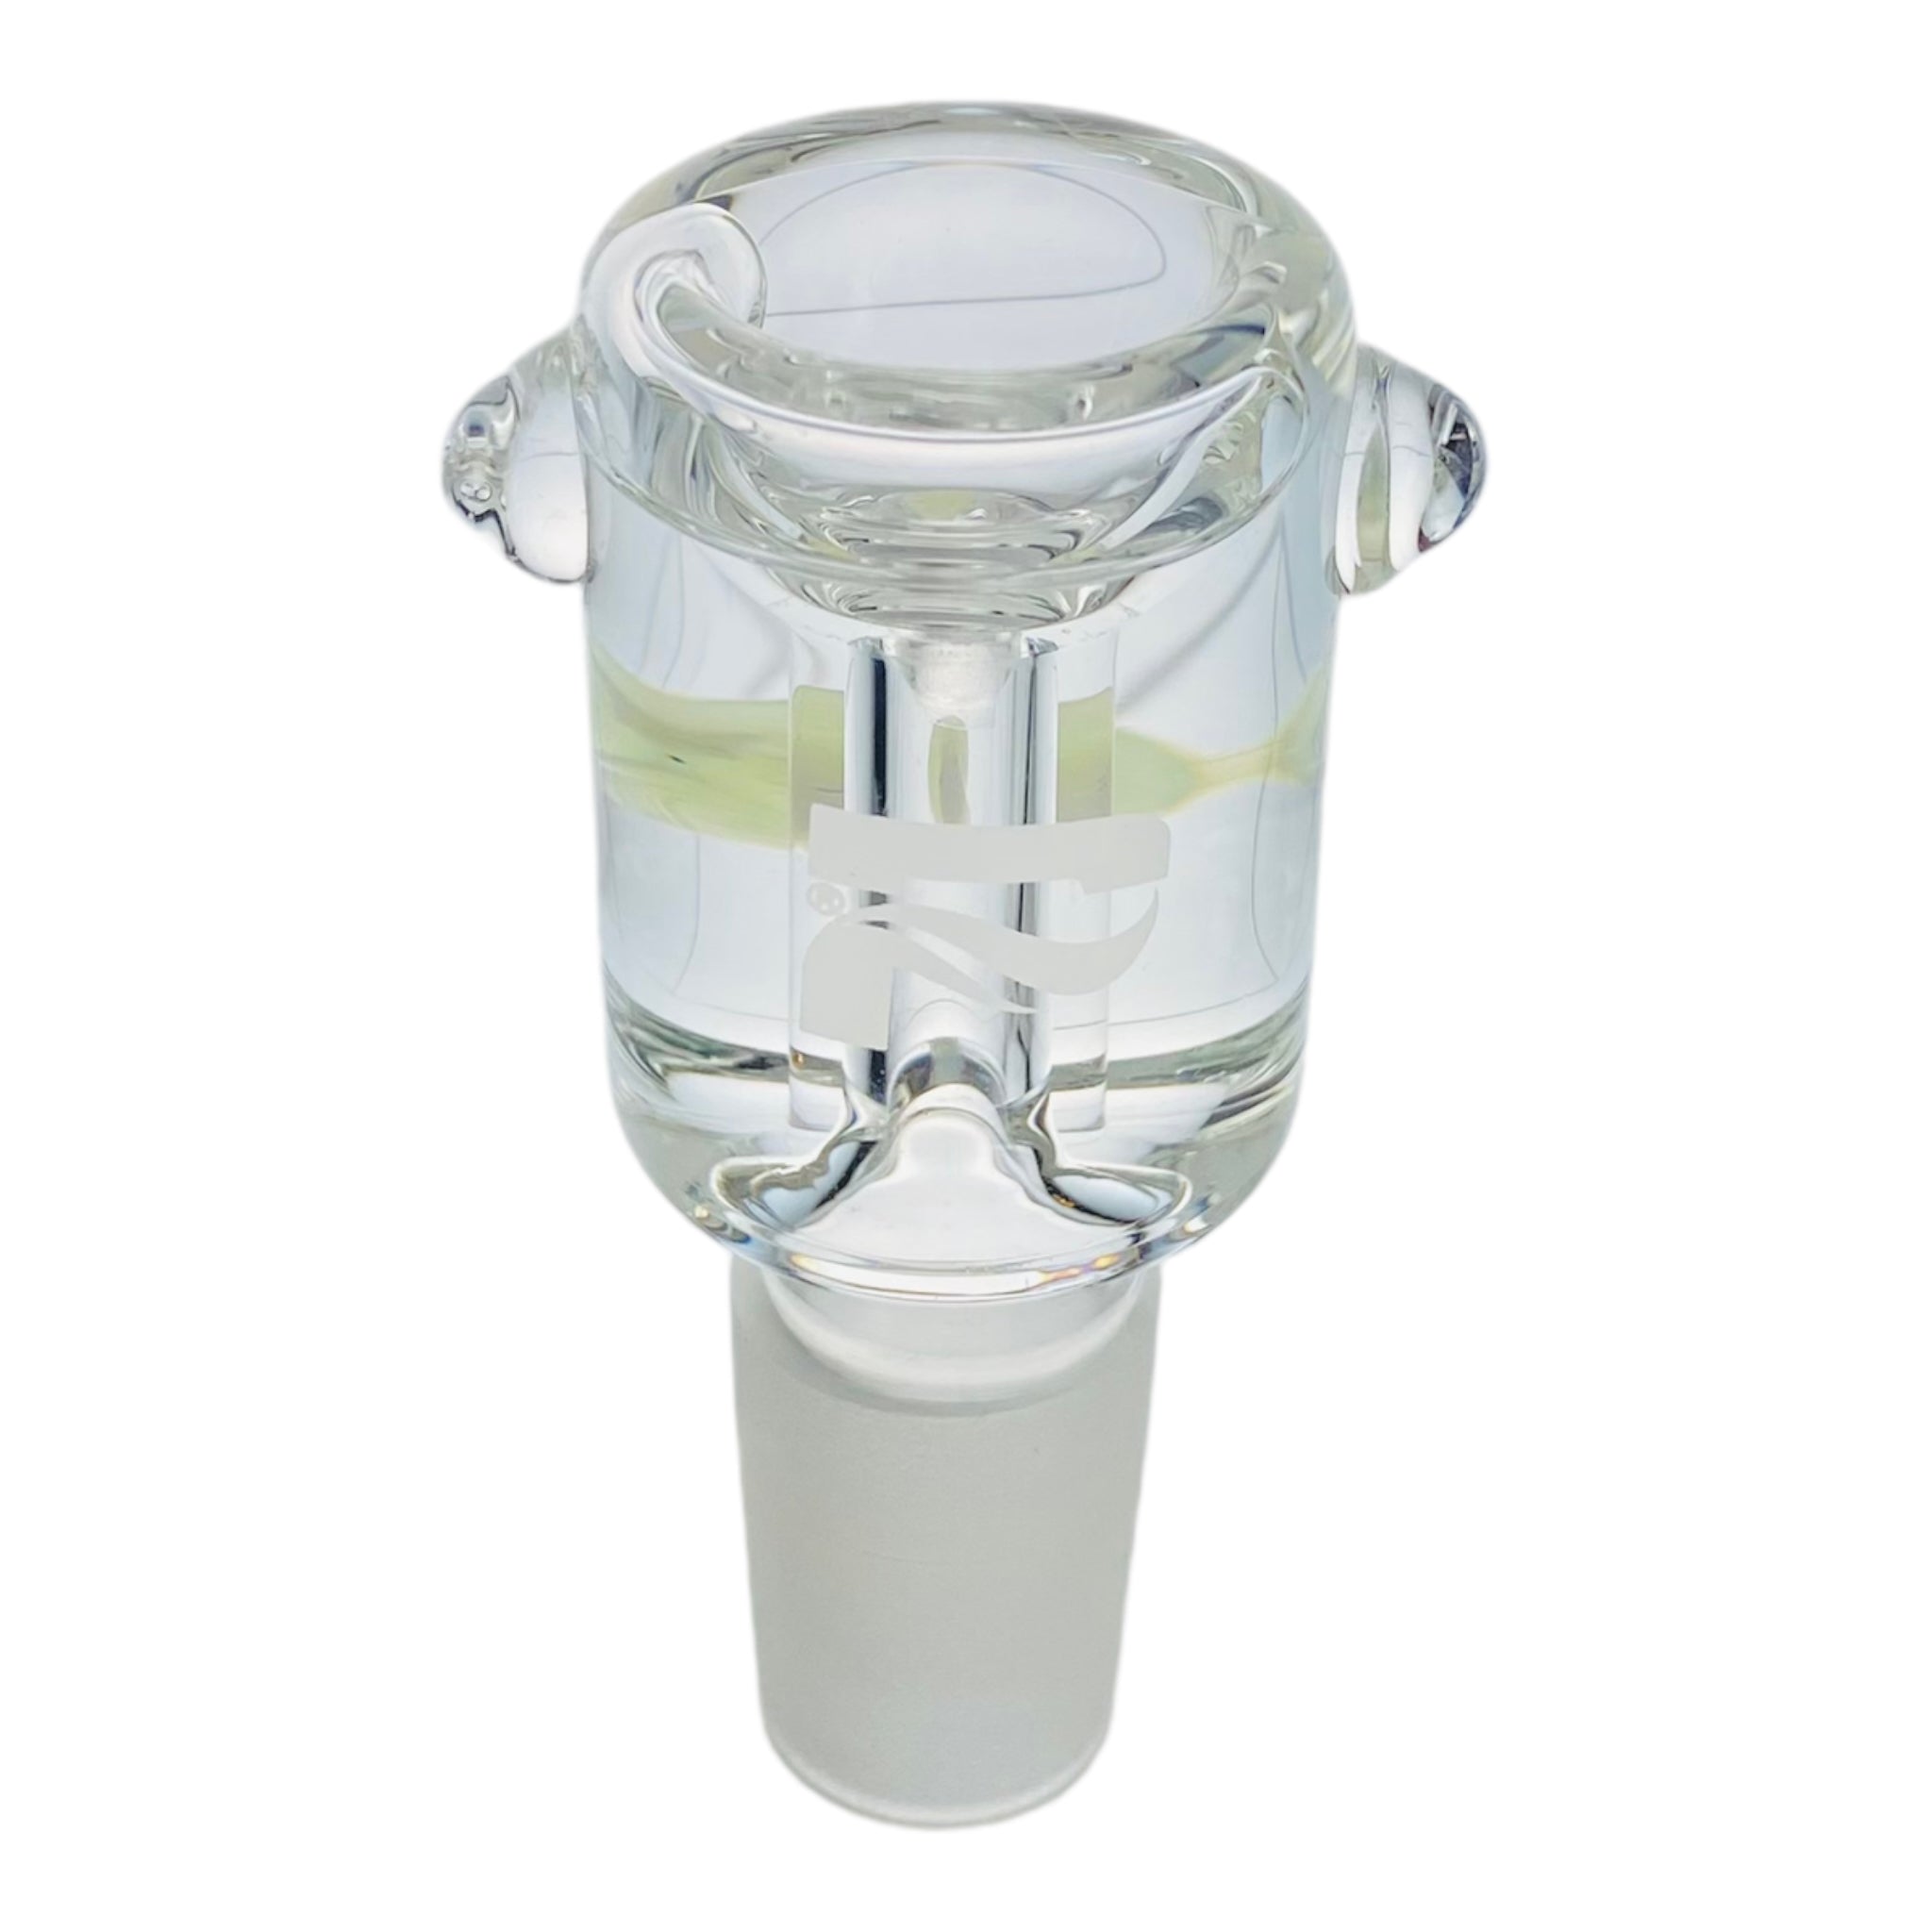 Pulsar Glass - 18mm Flower Bowl - Glycerin Chamber Bong Bowl Piece - Clear